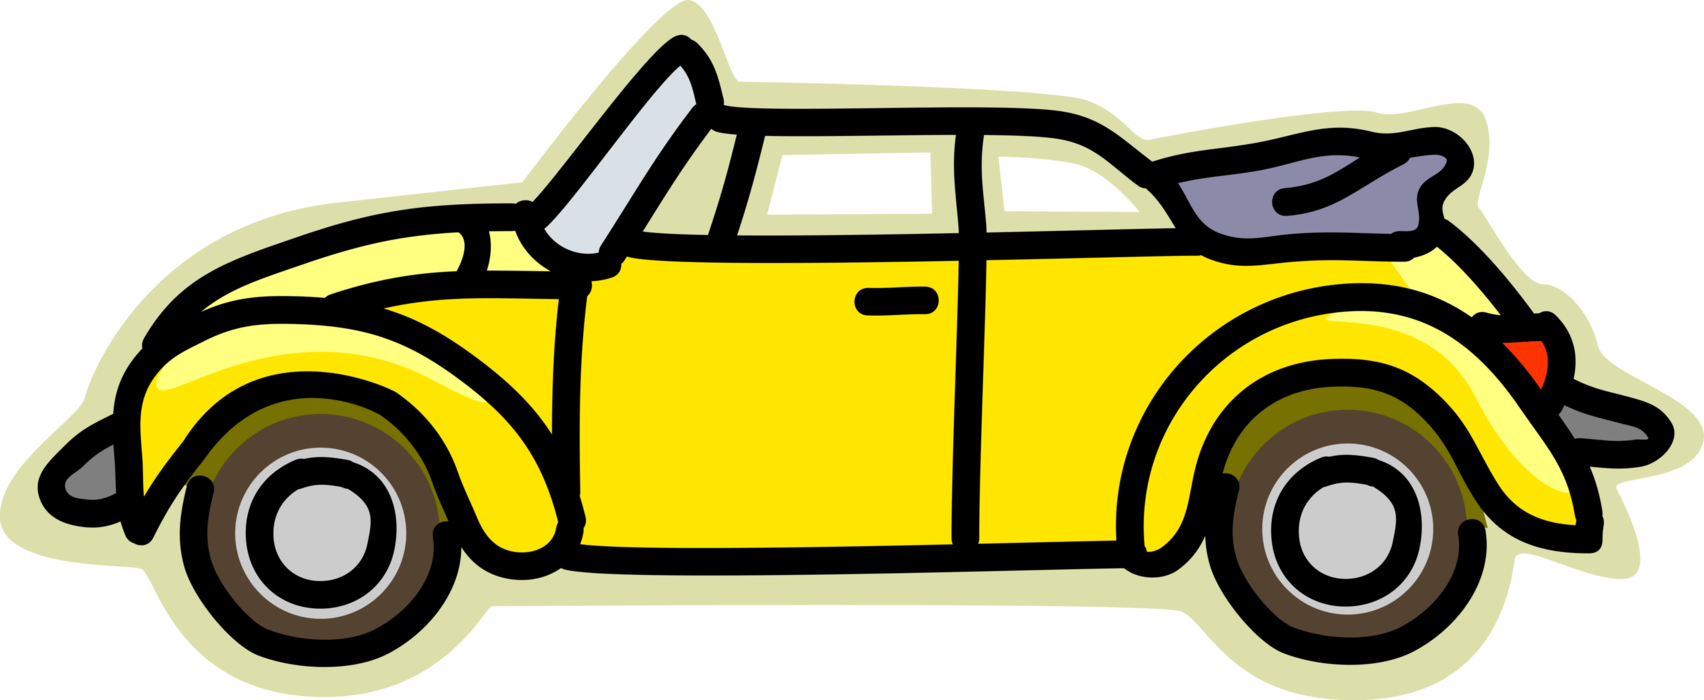 Vector Illustration of Convertible Volkswagen Beetle Car Automobile Motor Vehicle